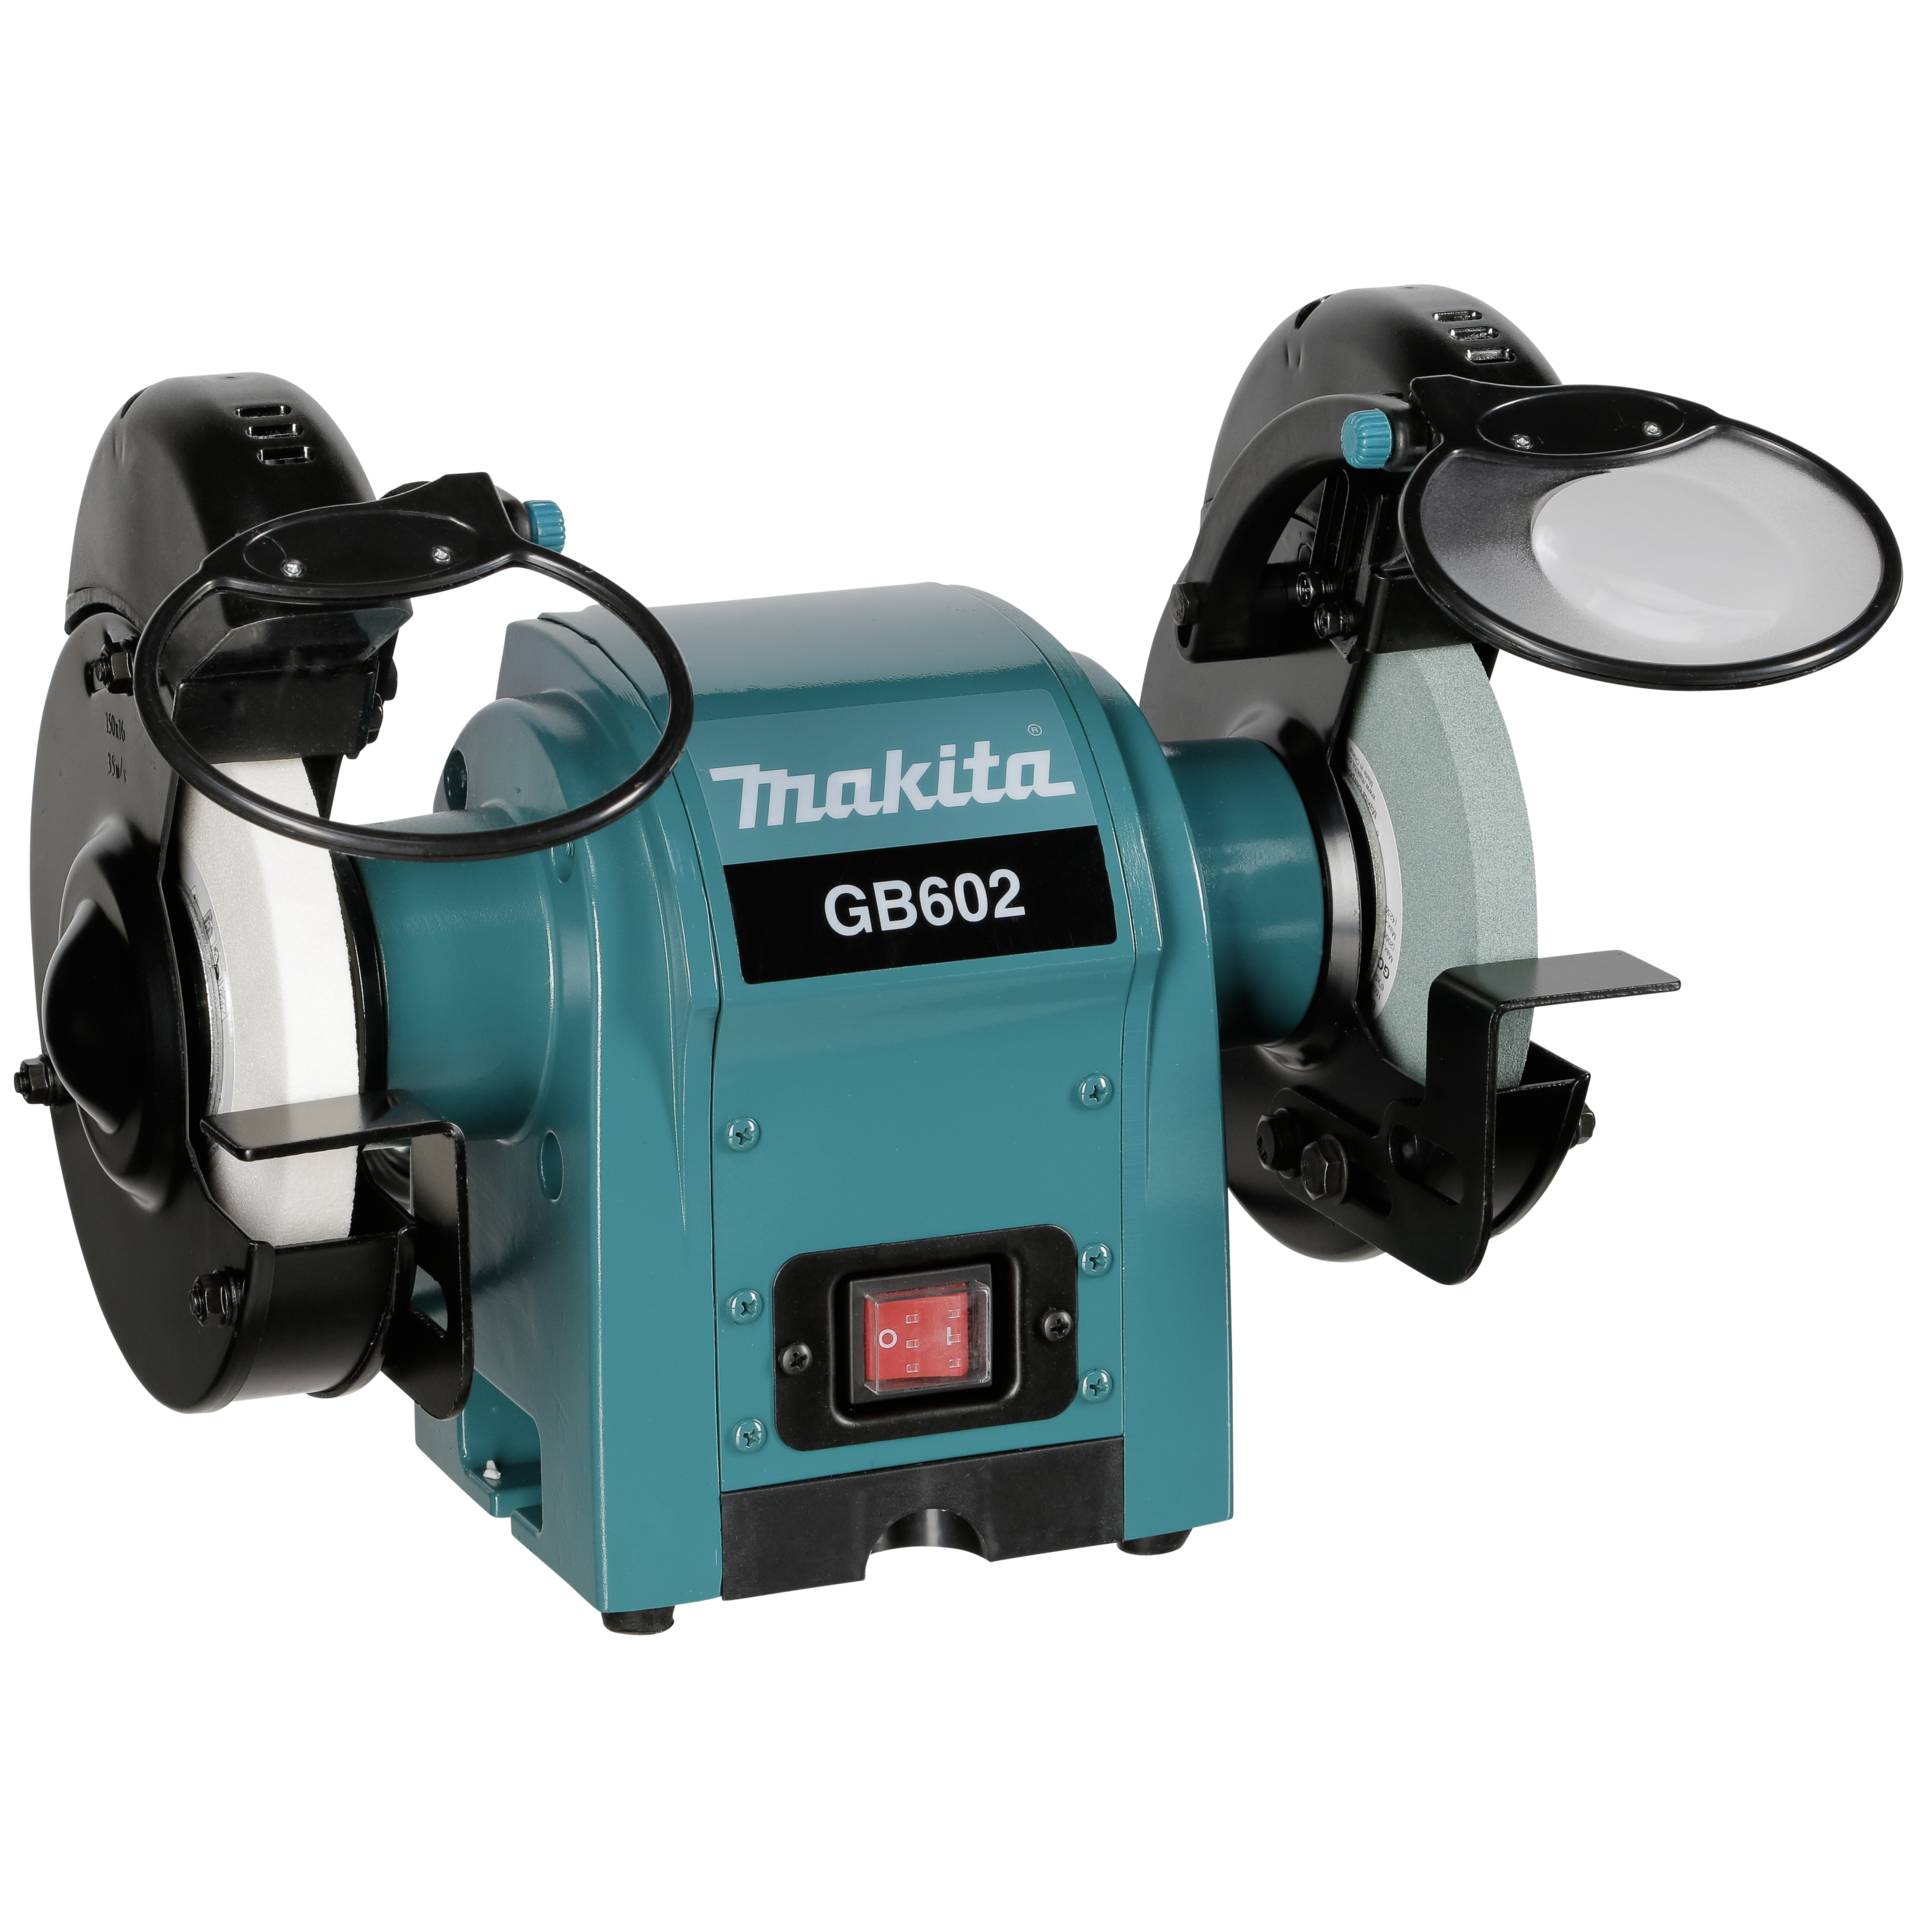 -GB602 -Makita Hardware/Electronic Doppelschleifer Makita